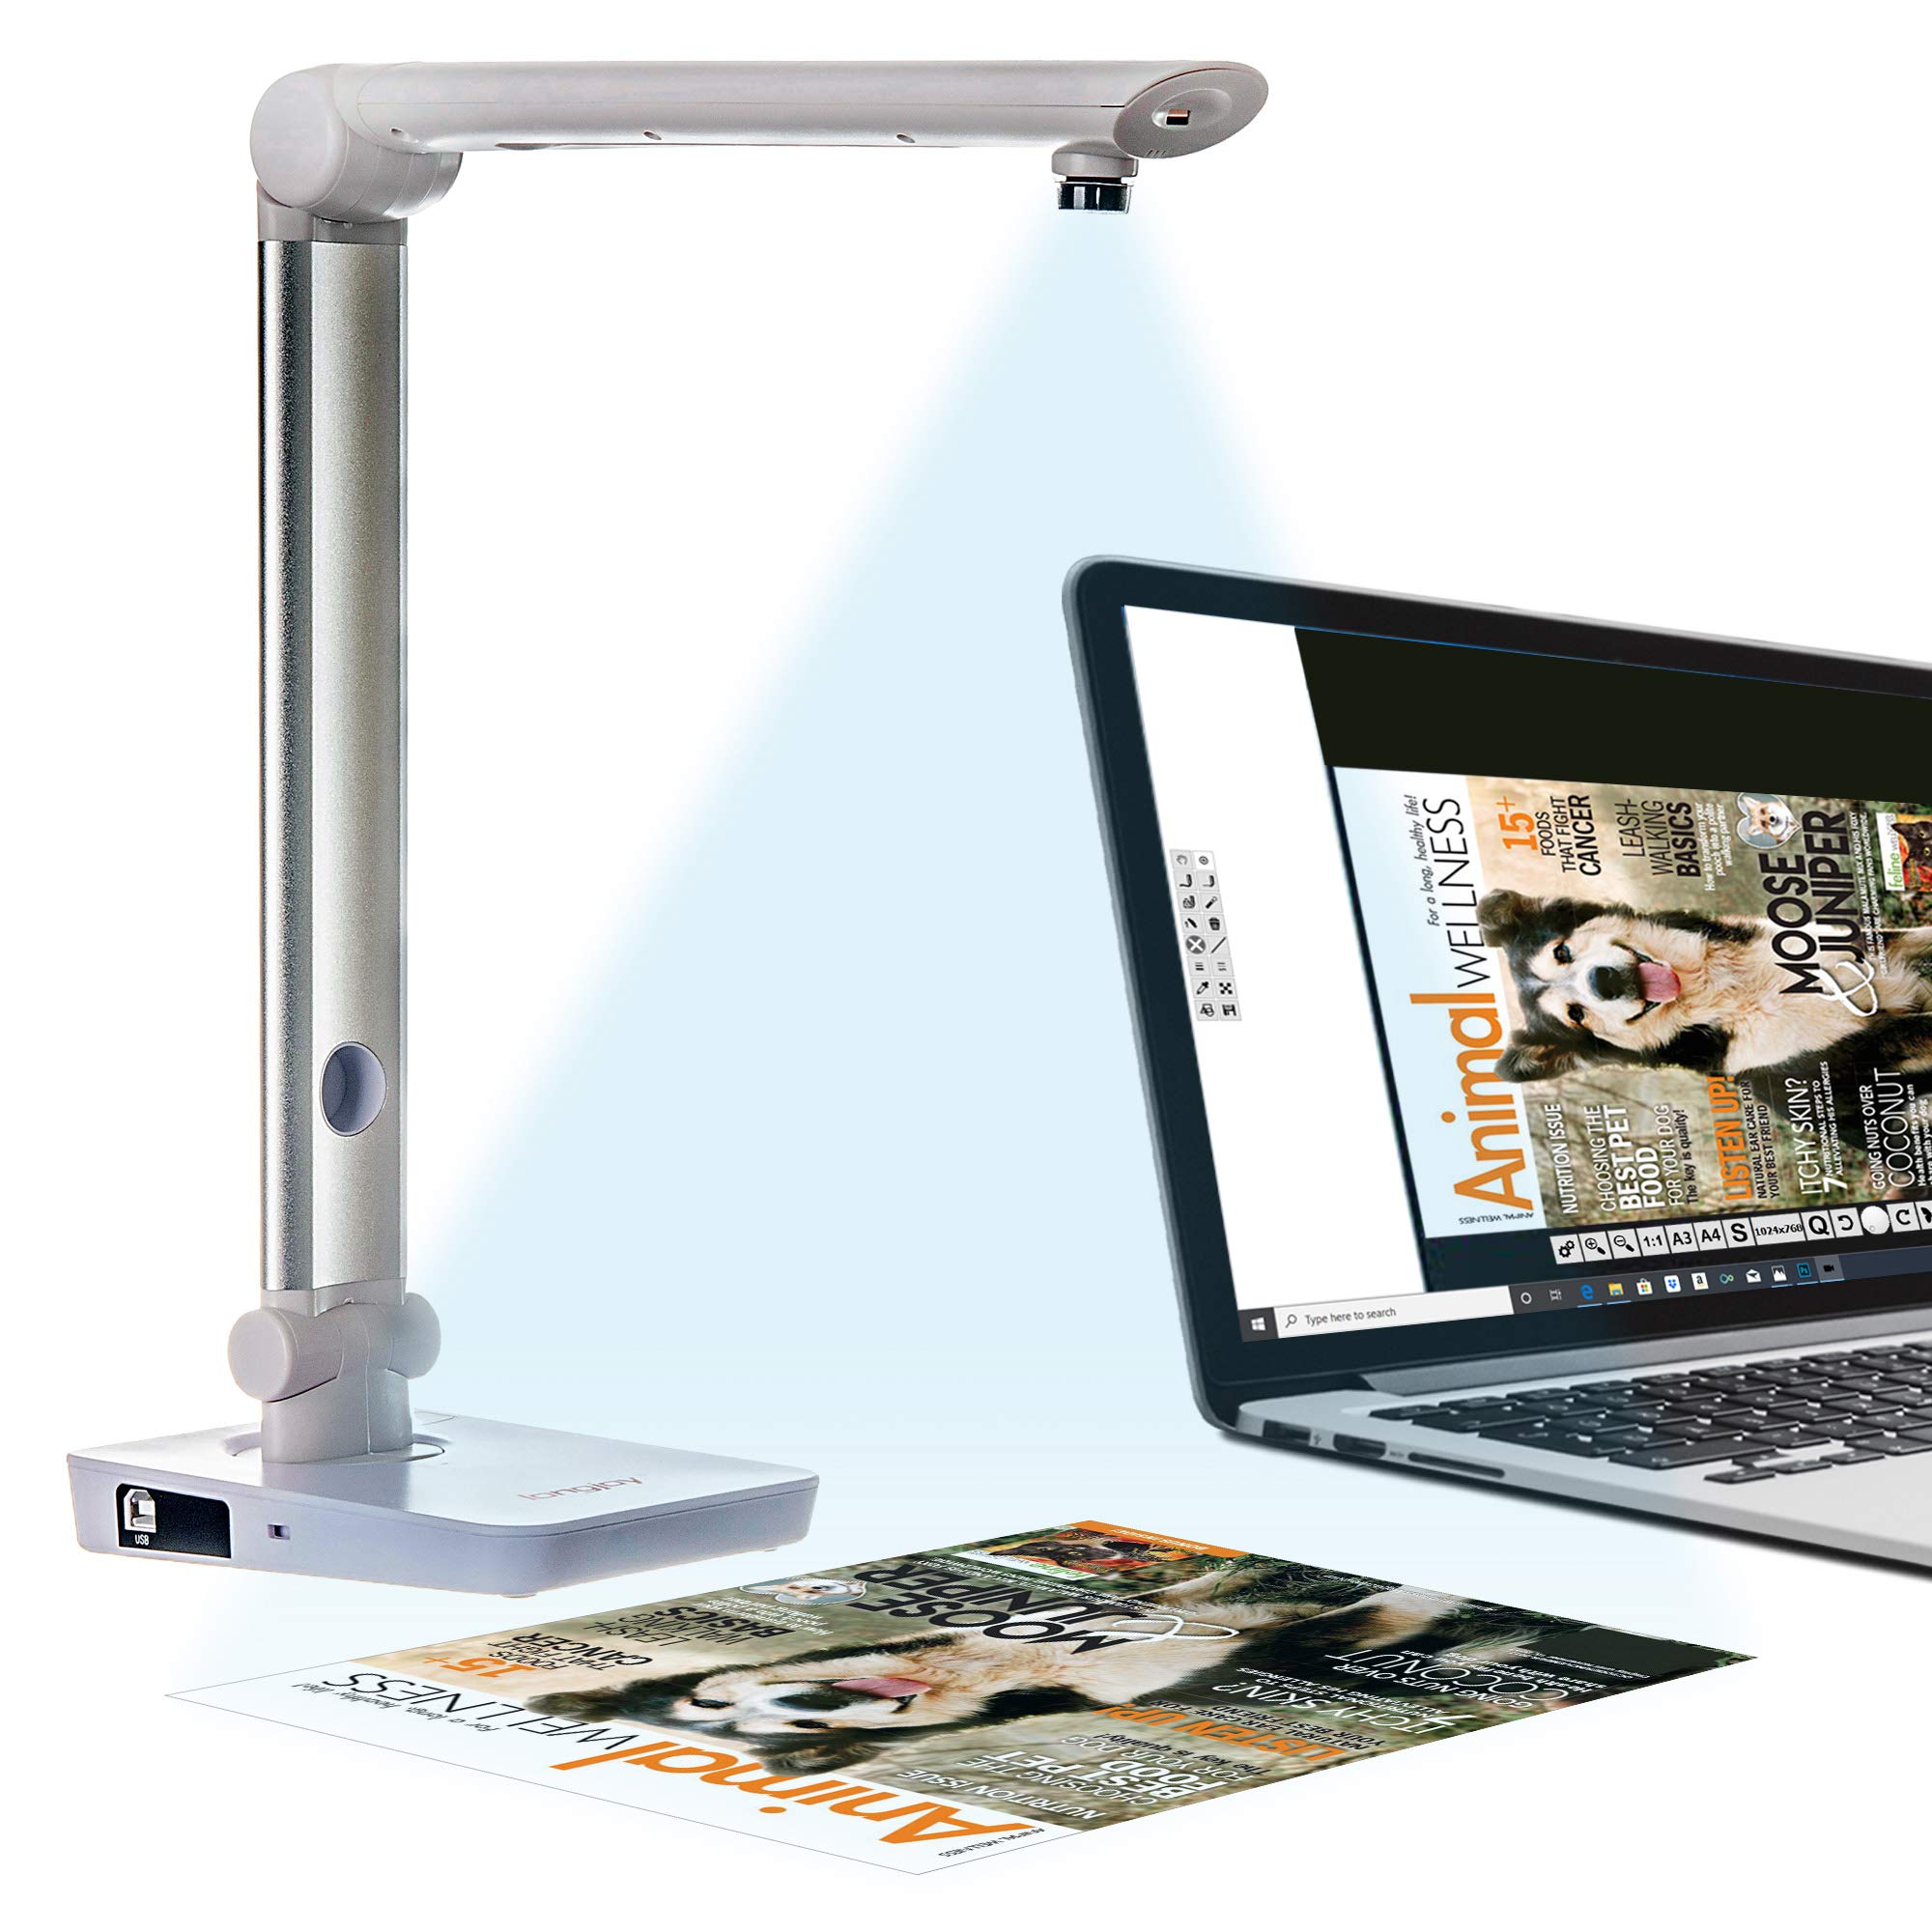 Longjoy Digital Portable Overhead USB Distance Teaching Document Camera LV-1010 (White)